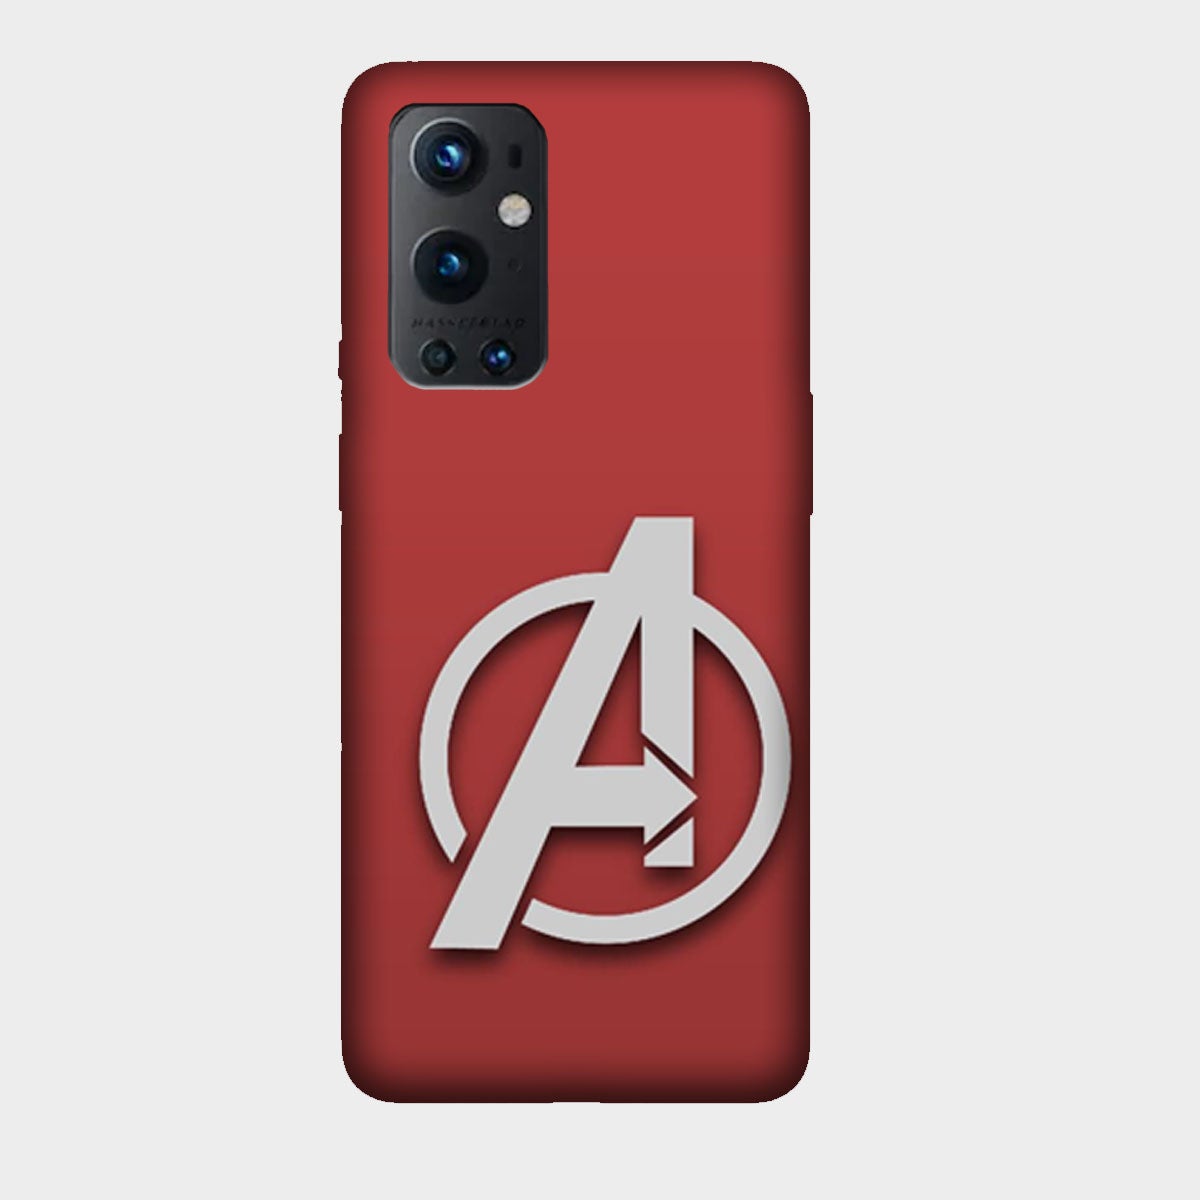 Avenger - Red - Mobile Phone Cover - Hard Case - OnePlus